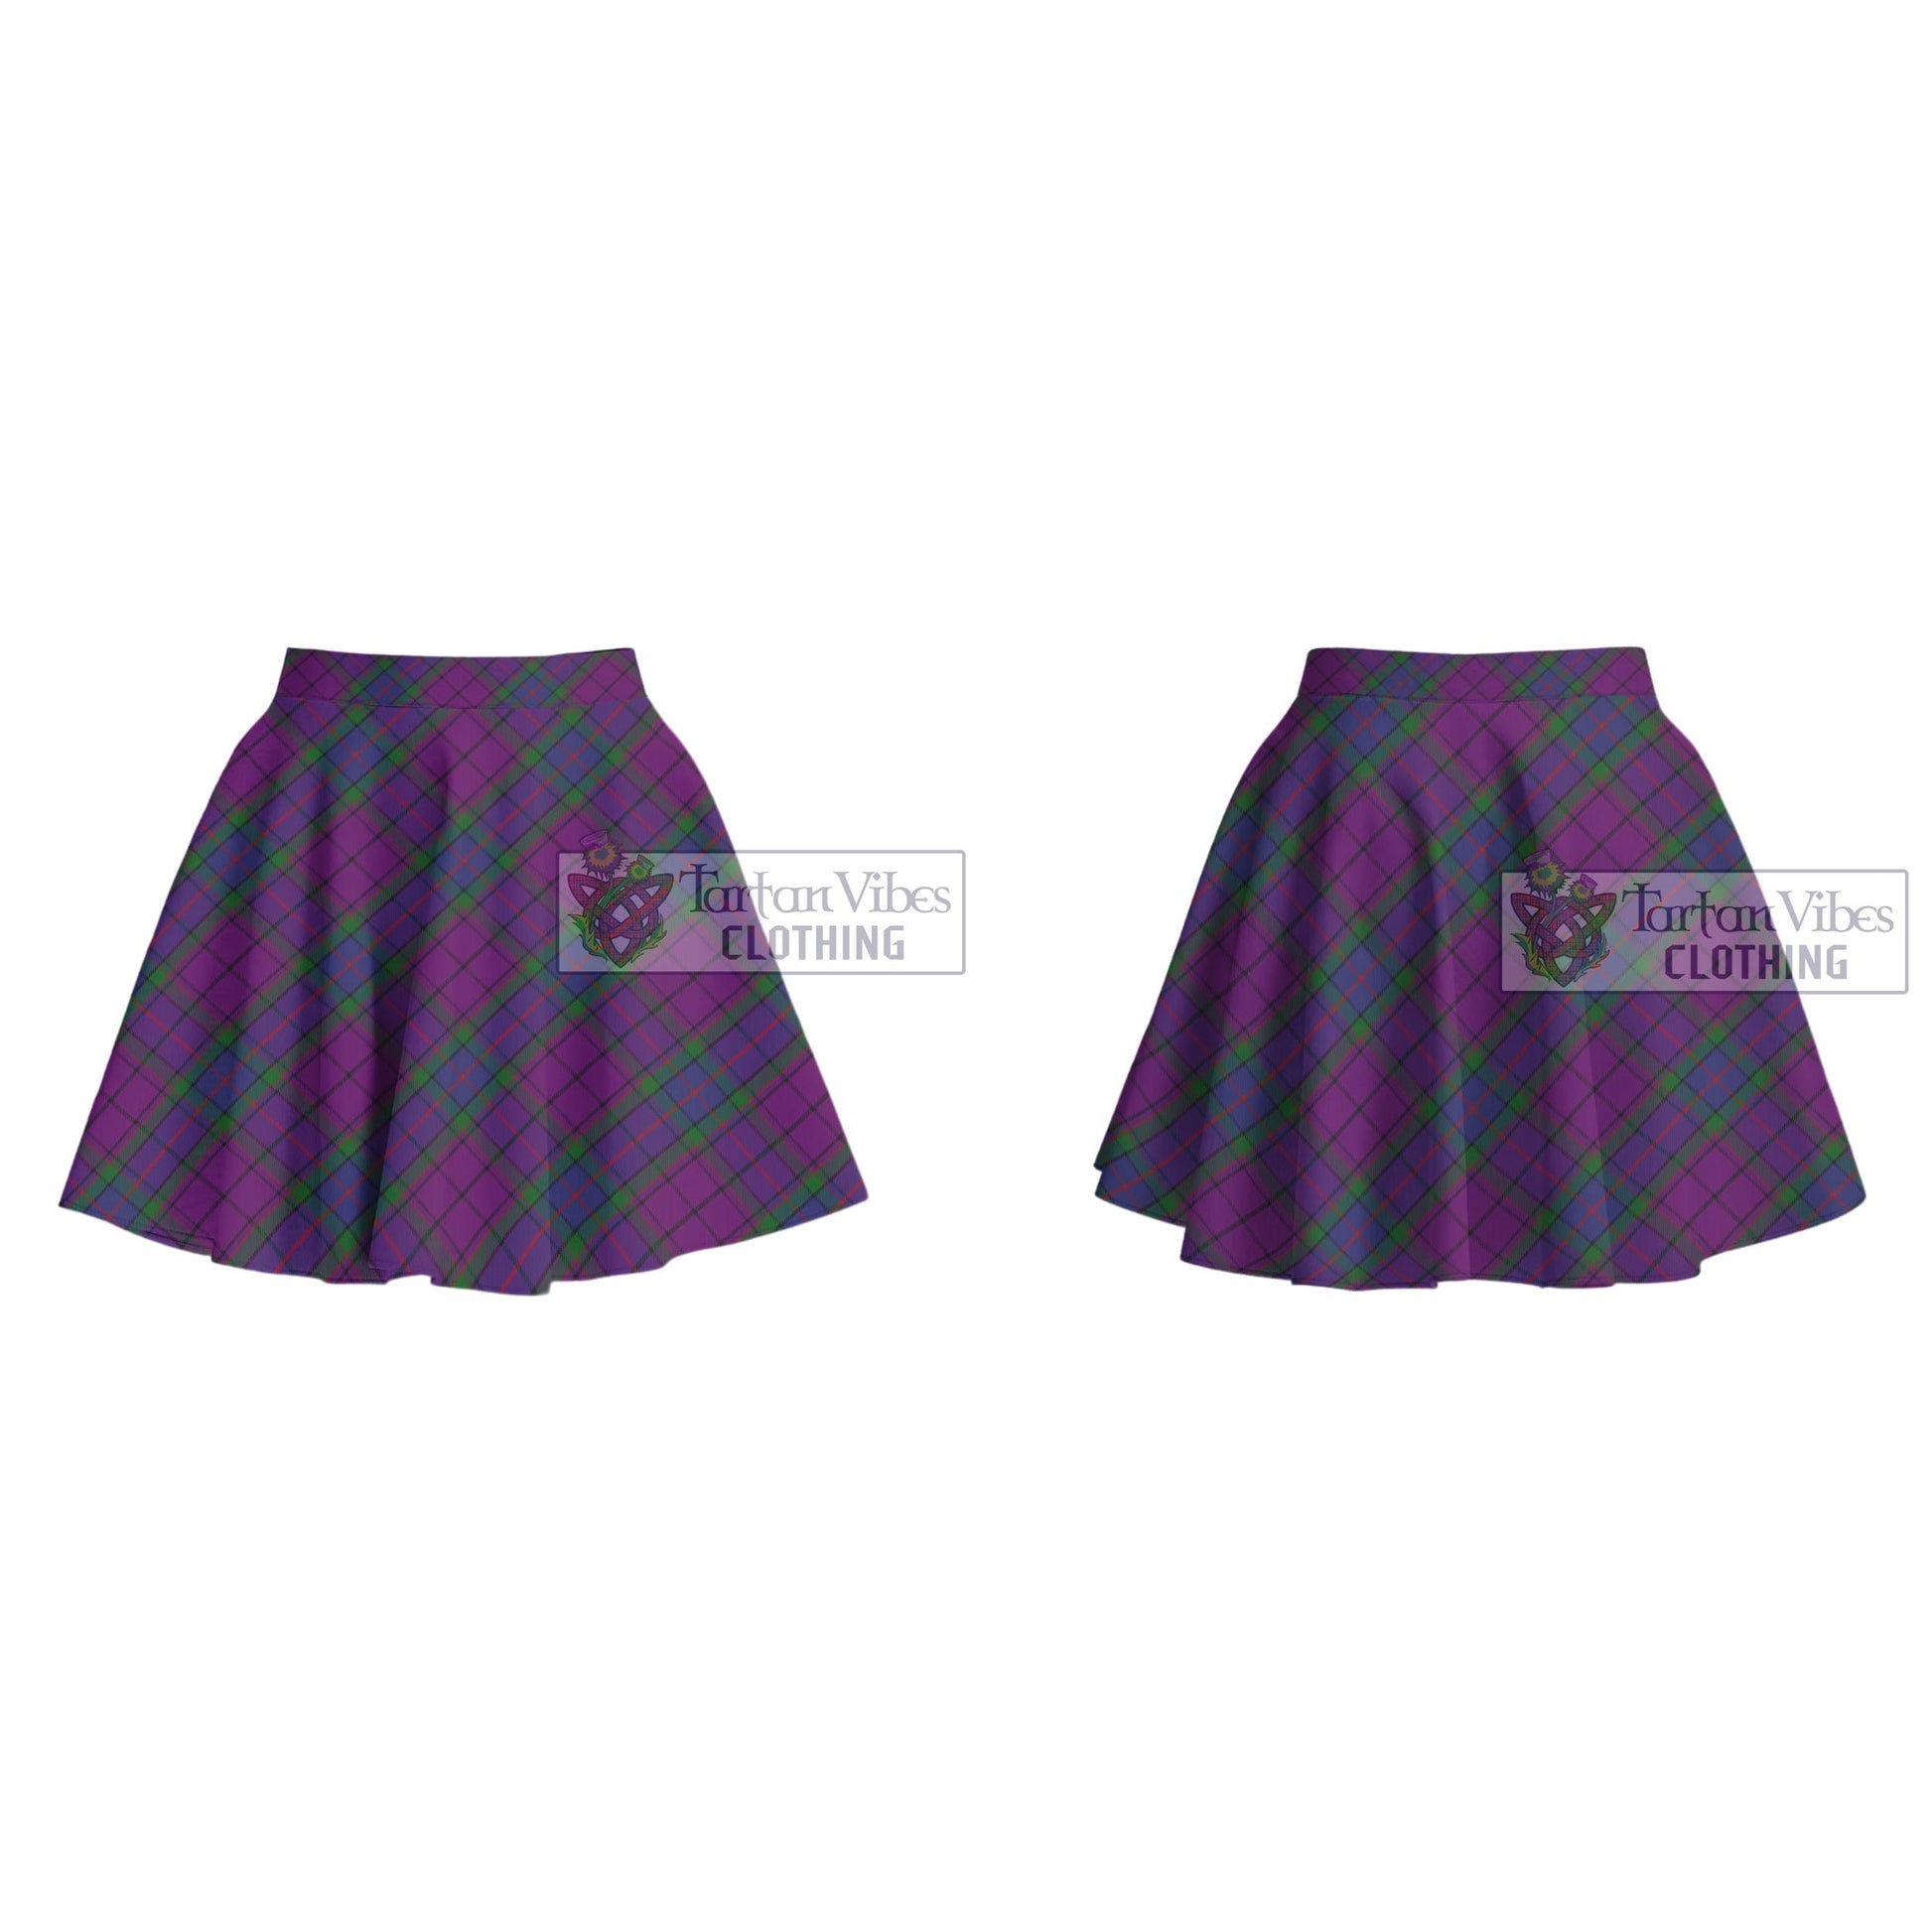 Tartan Vibes Clothing Wardlaw Tartan Women's Plated Mini Skirt